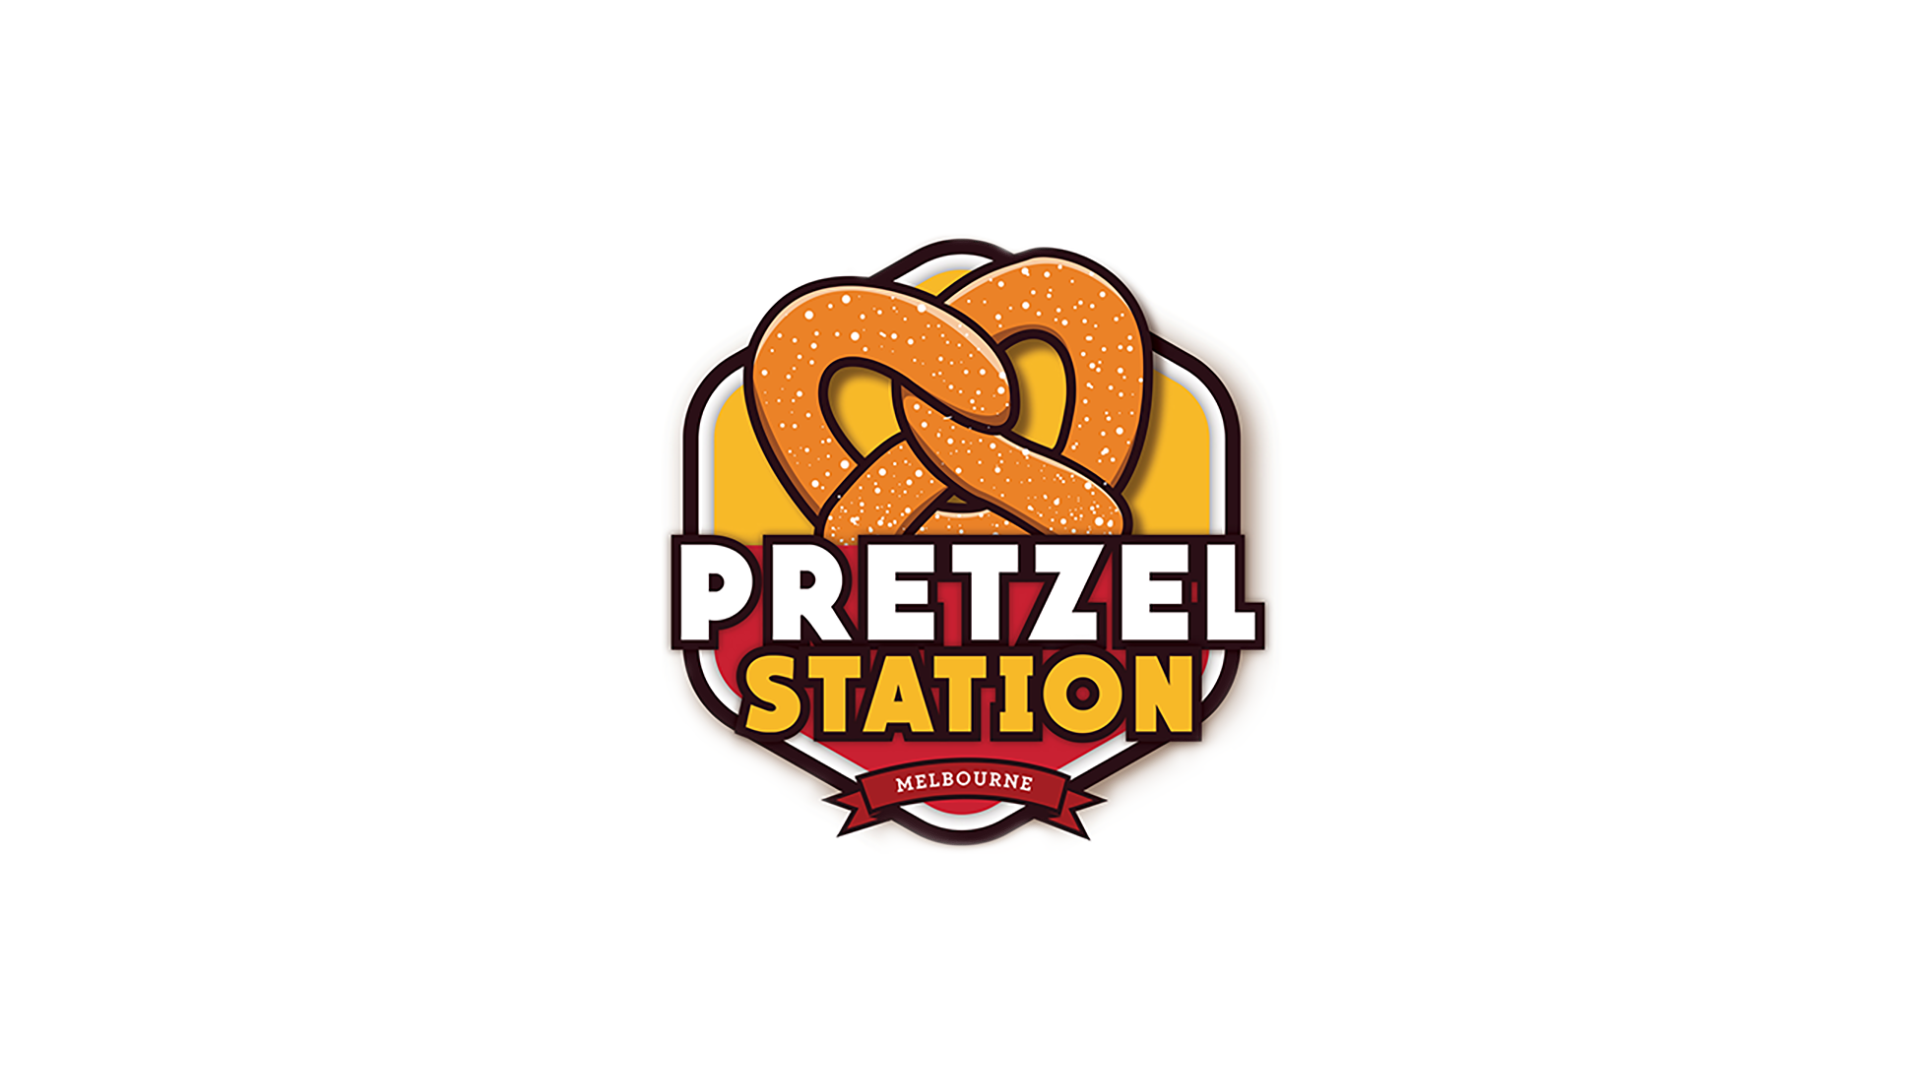 The Pretzel Station